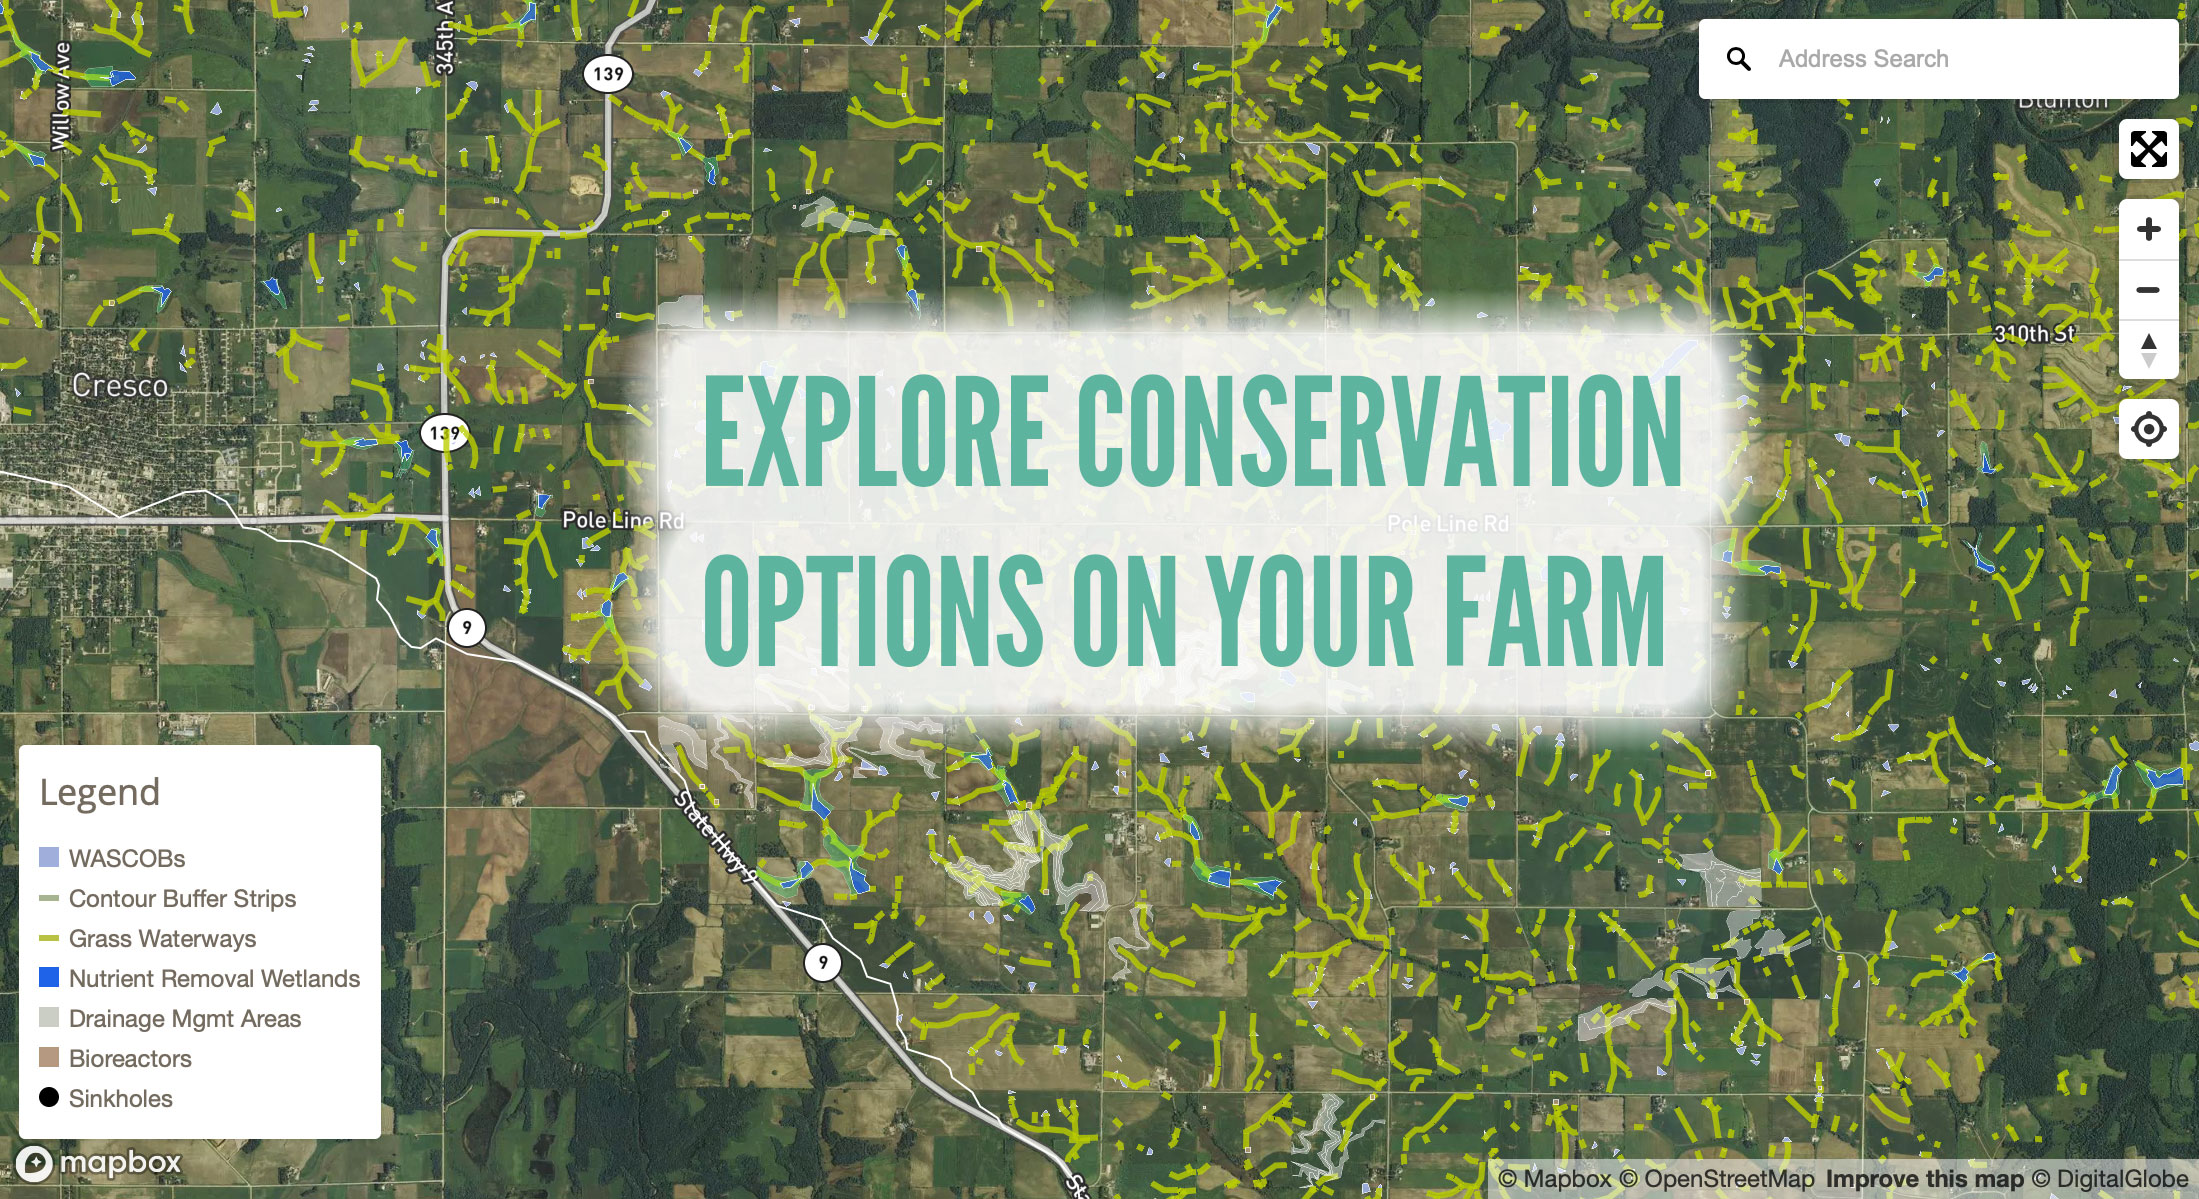 Explore Conservation Options on Your Farm